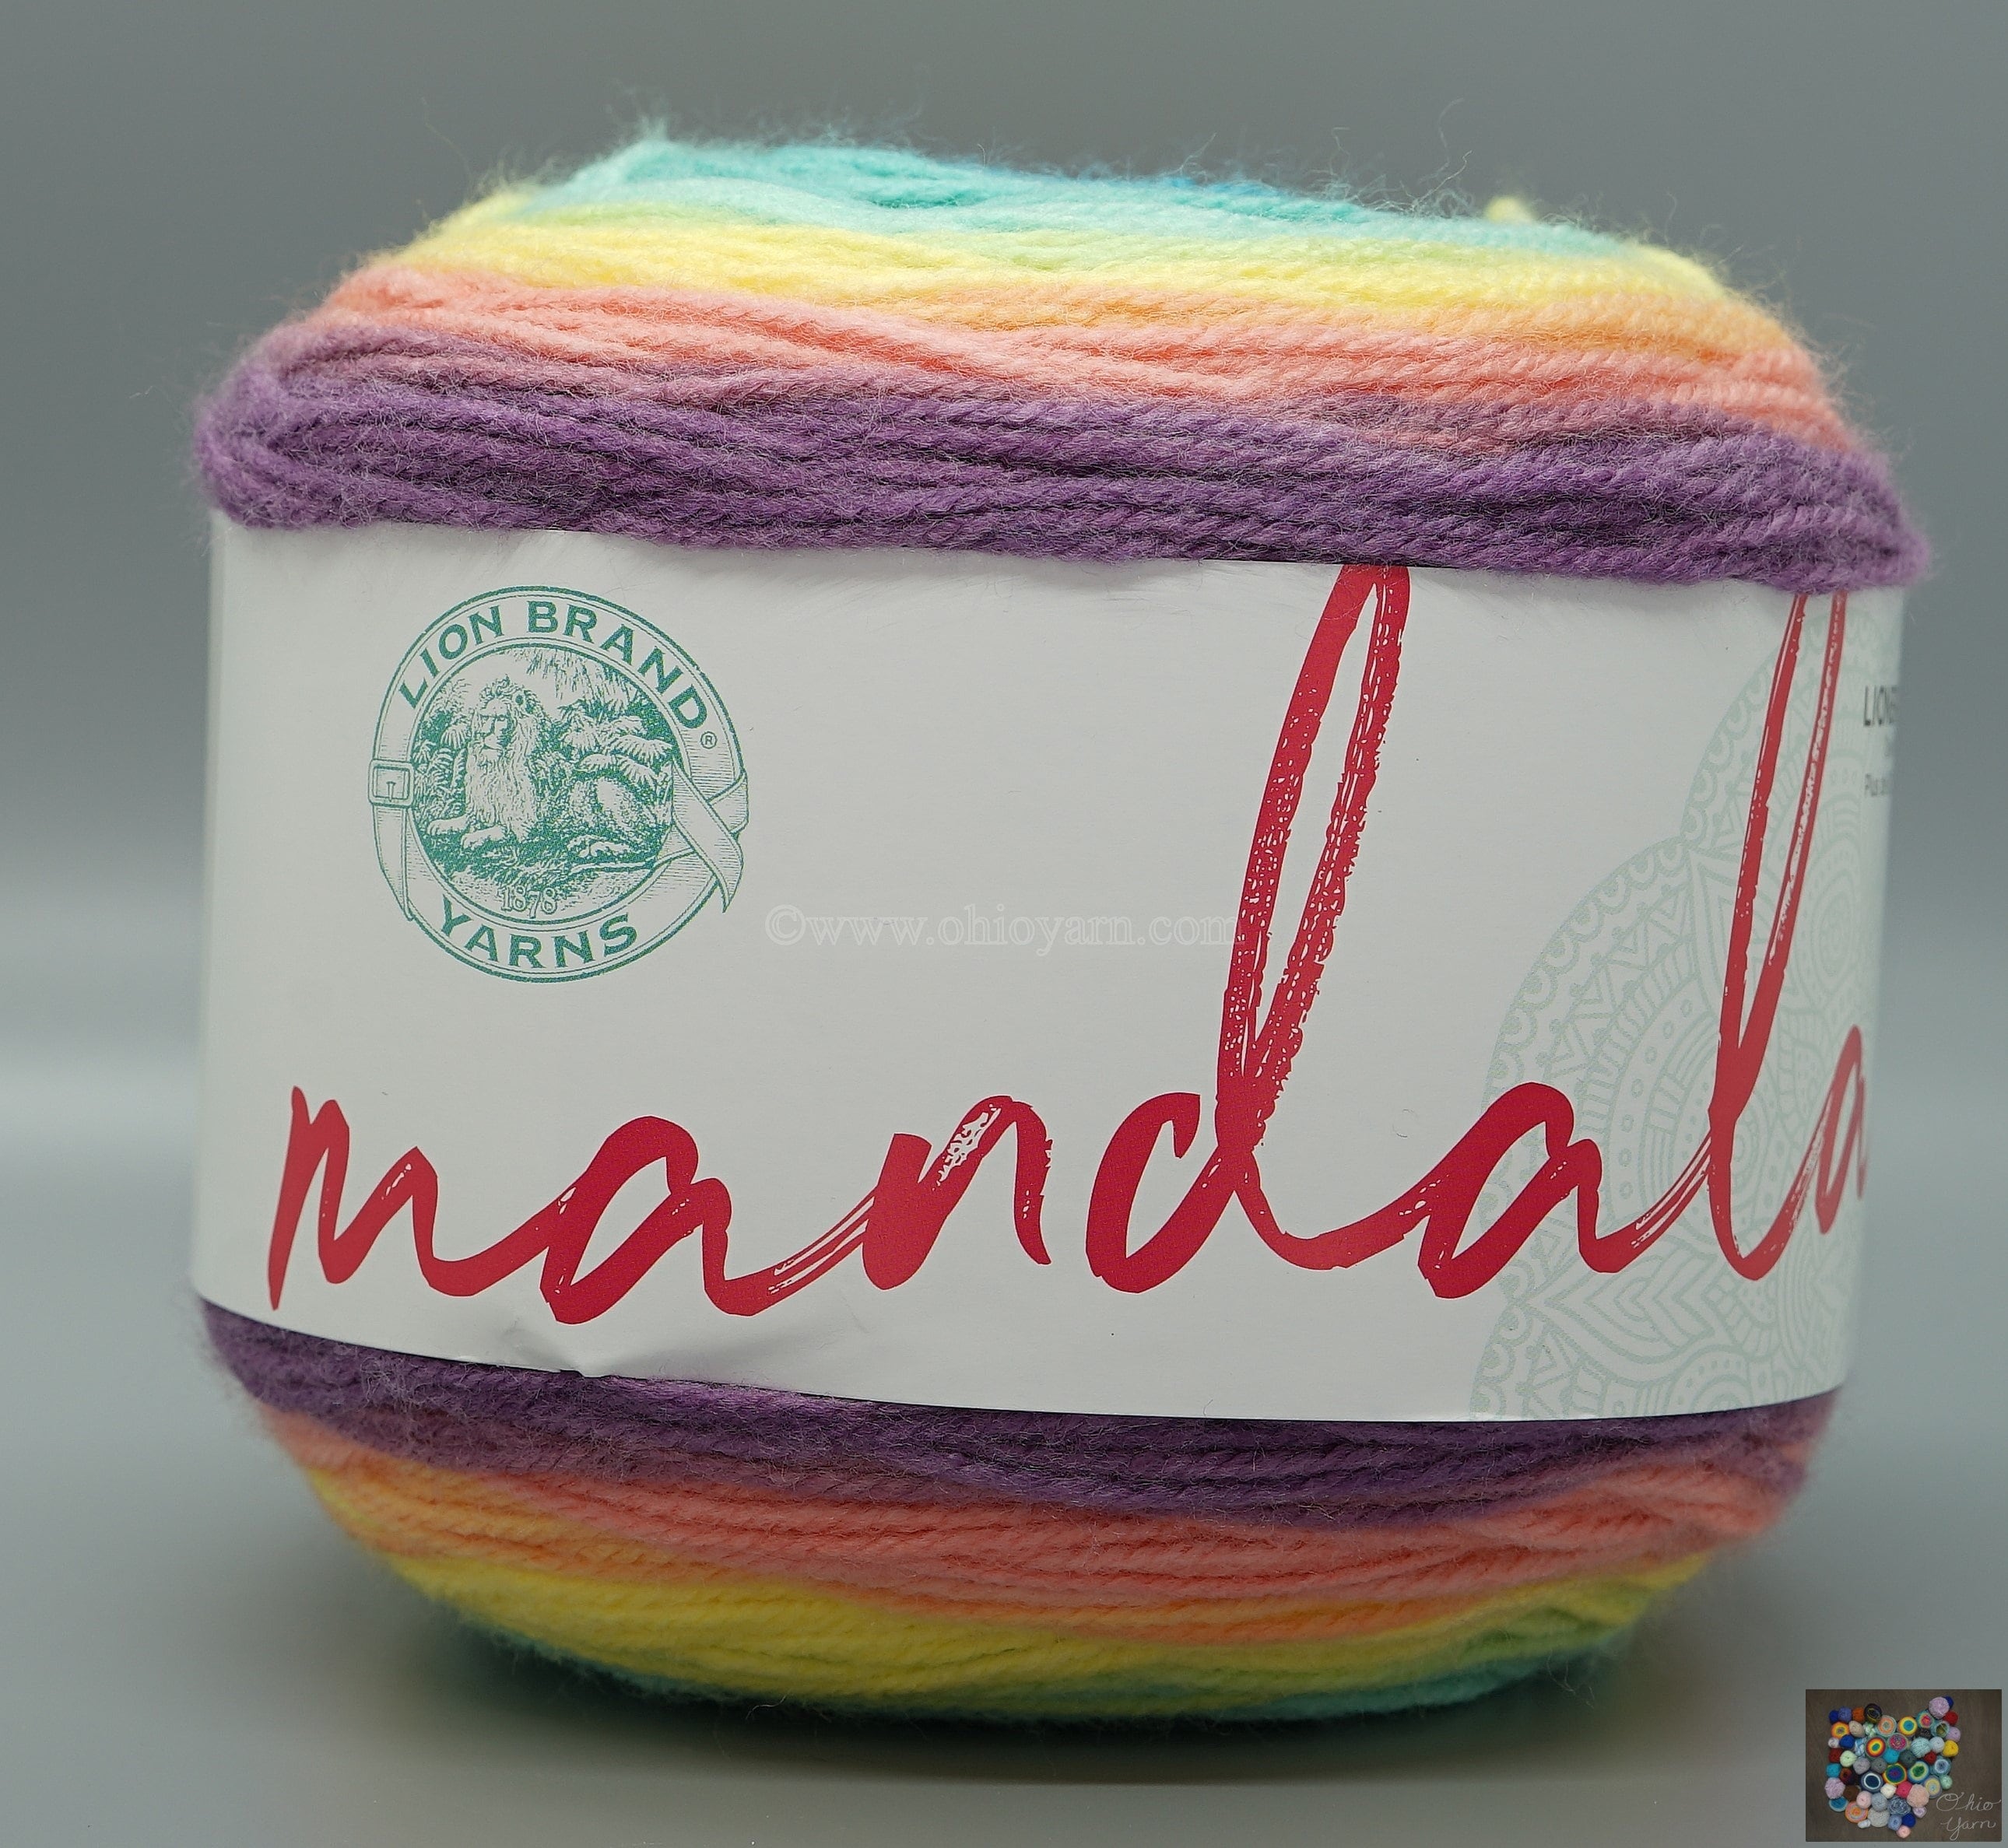 Lion Brand Nifflers Yarn Mandala